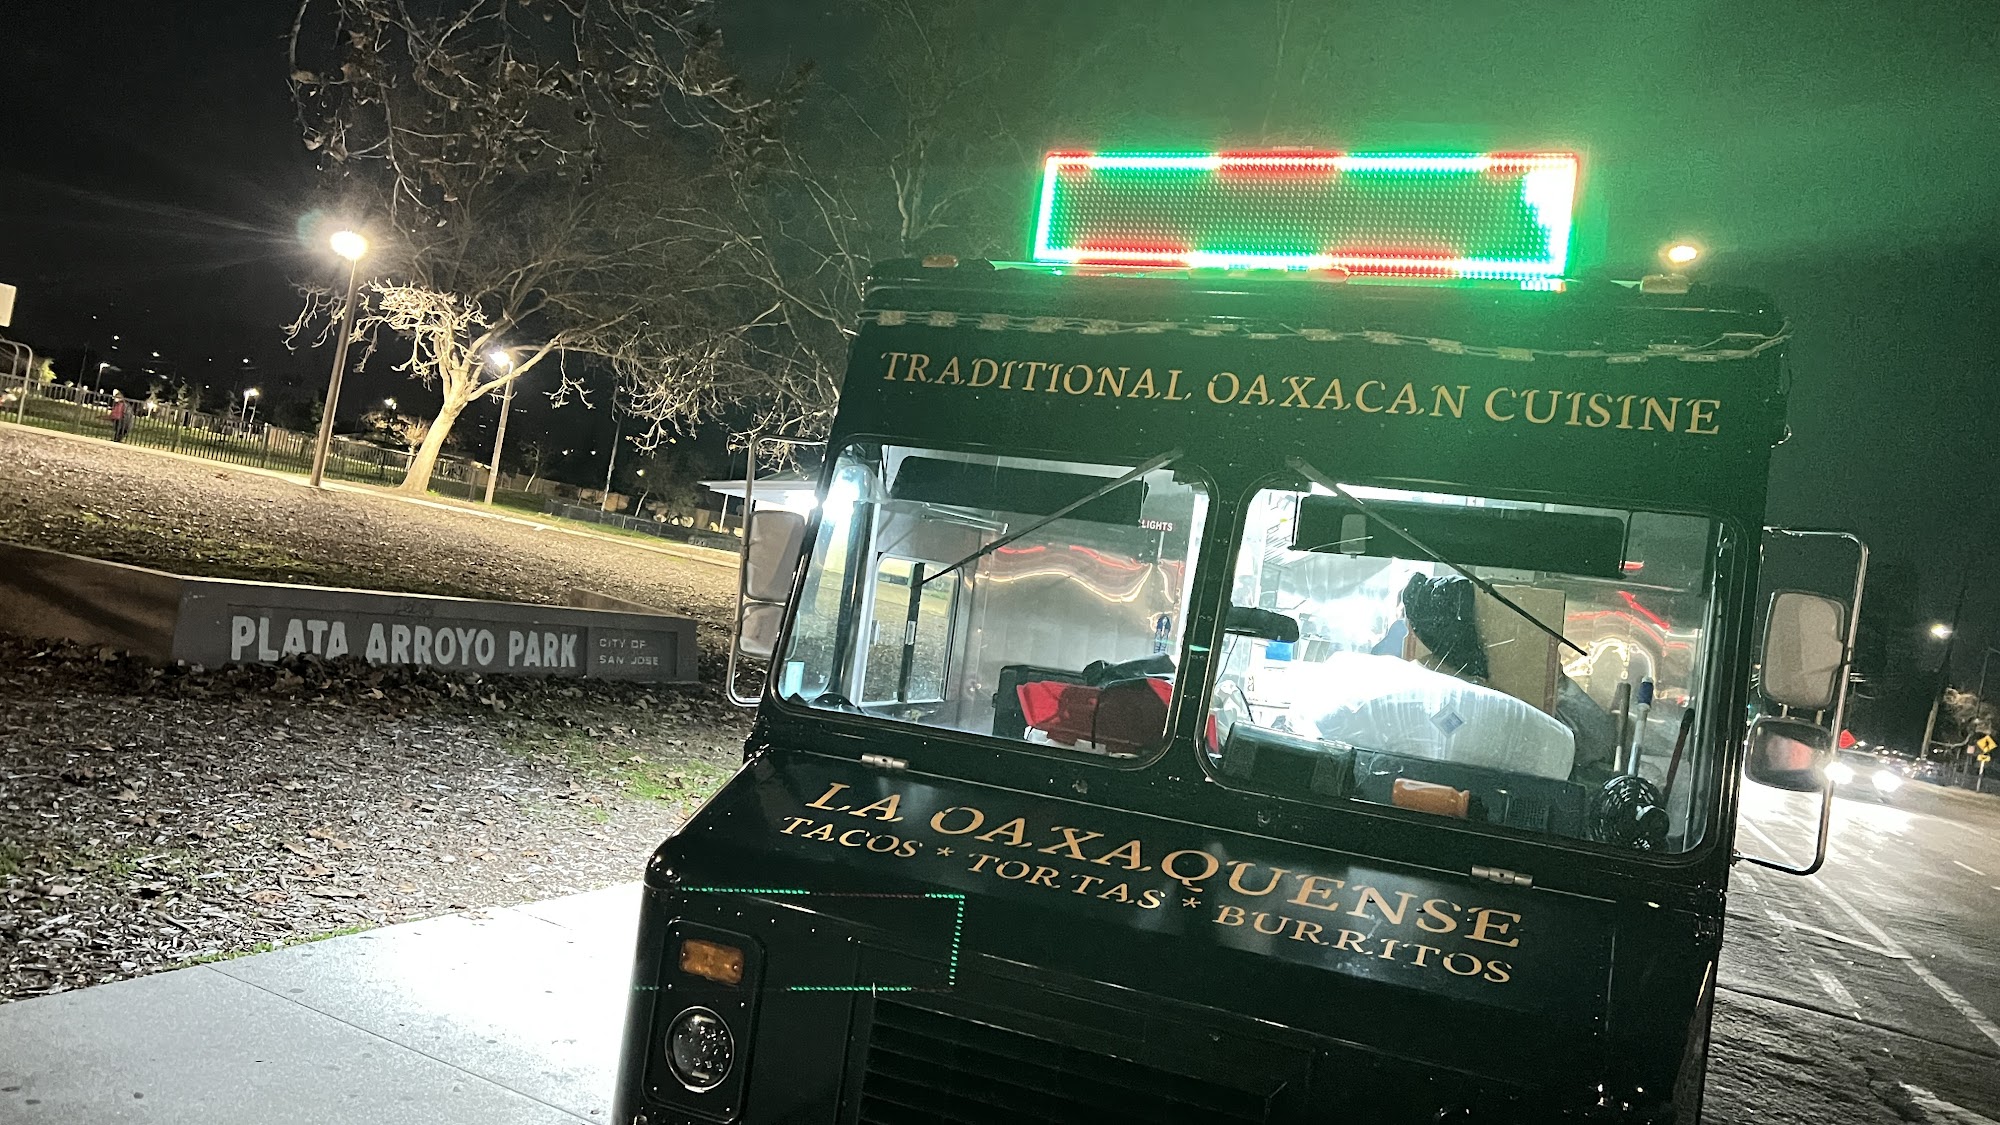 La Oaxaquense Food Truck